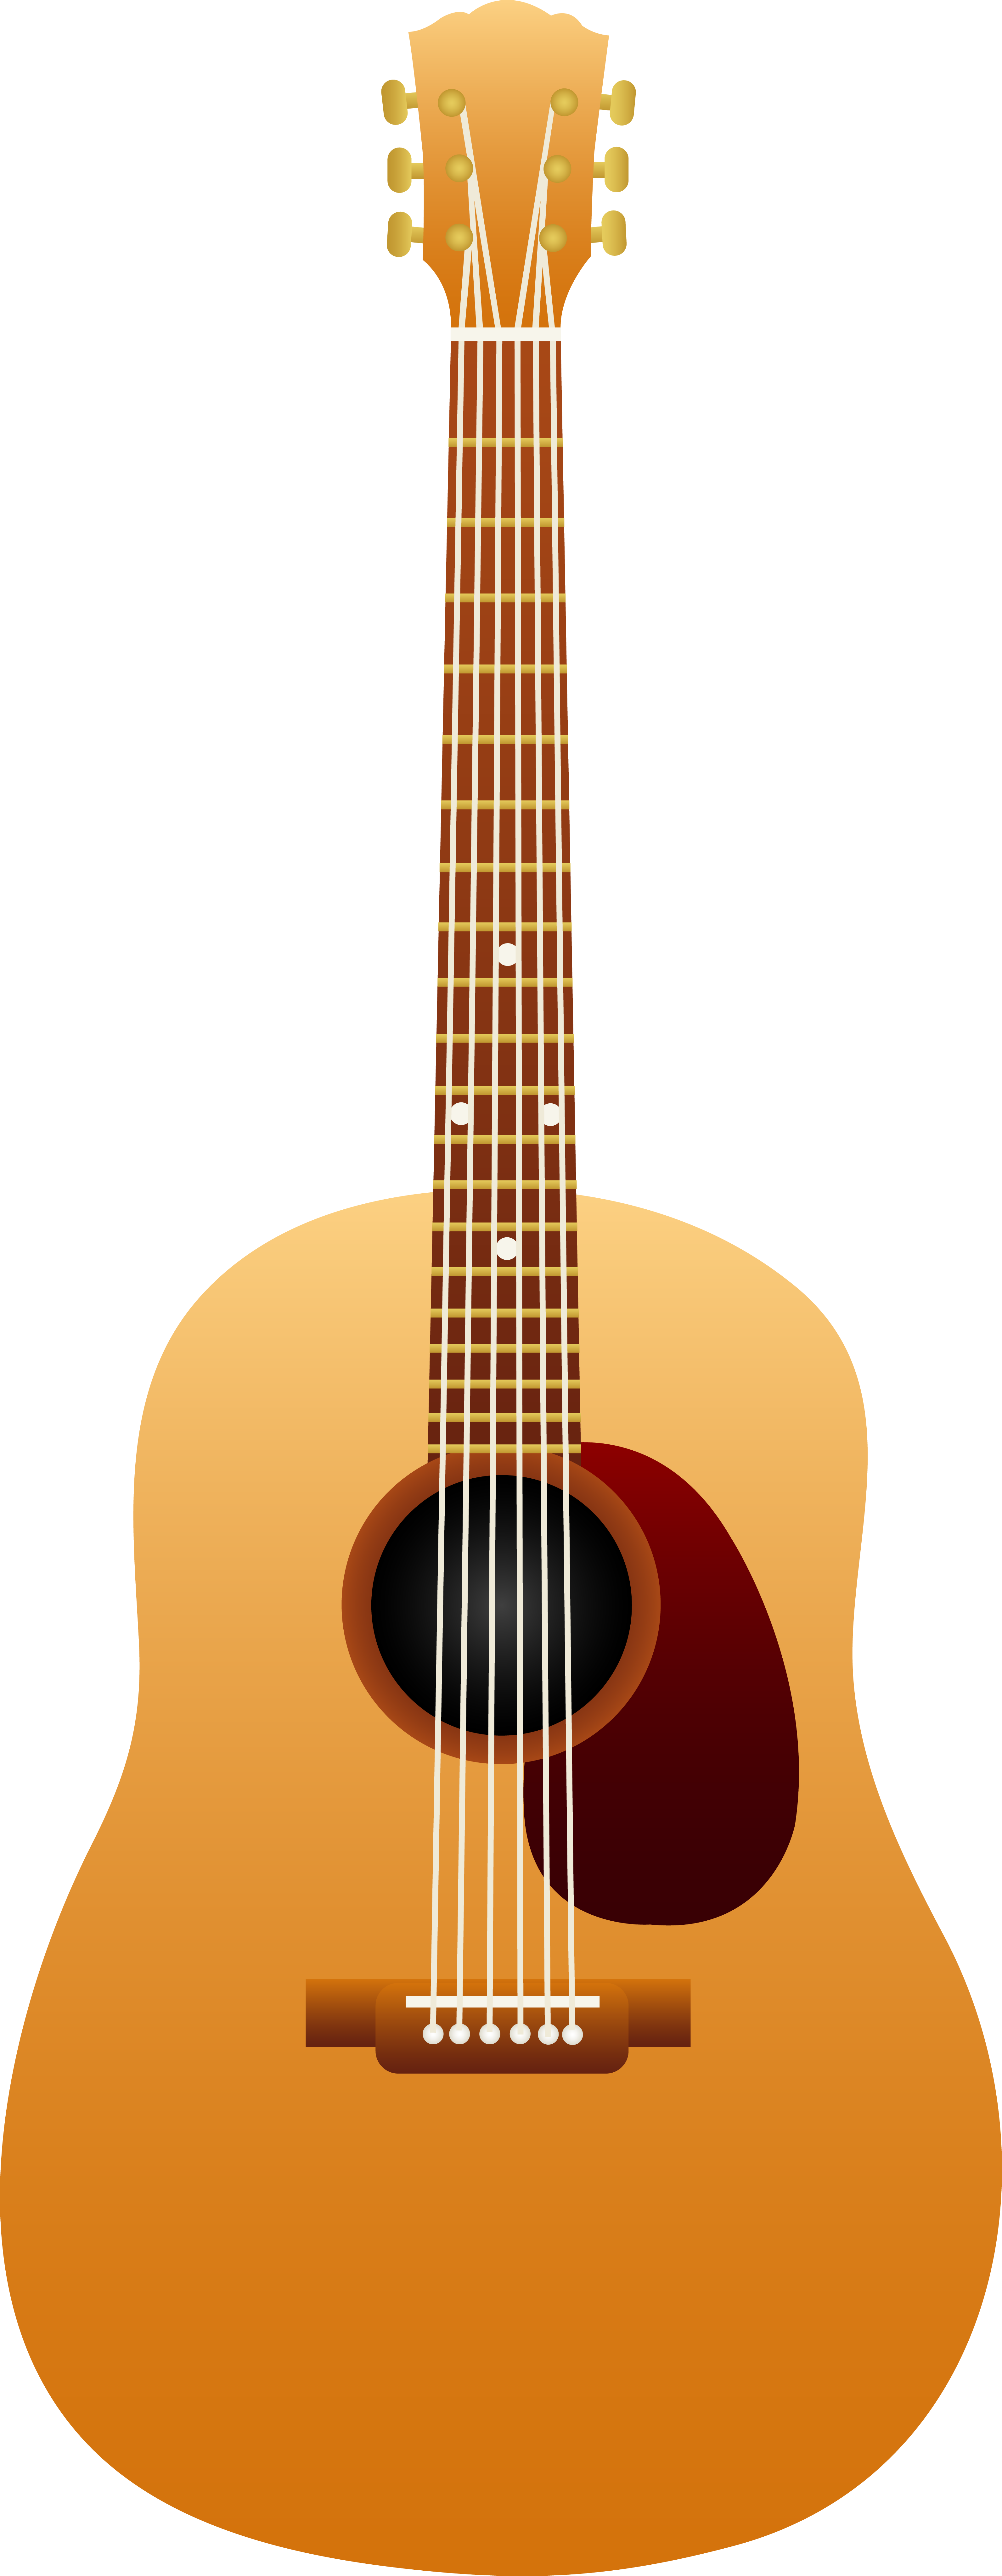 Guitar Clip Art Classical Acoustic Wooden Guitar Png